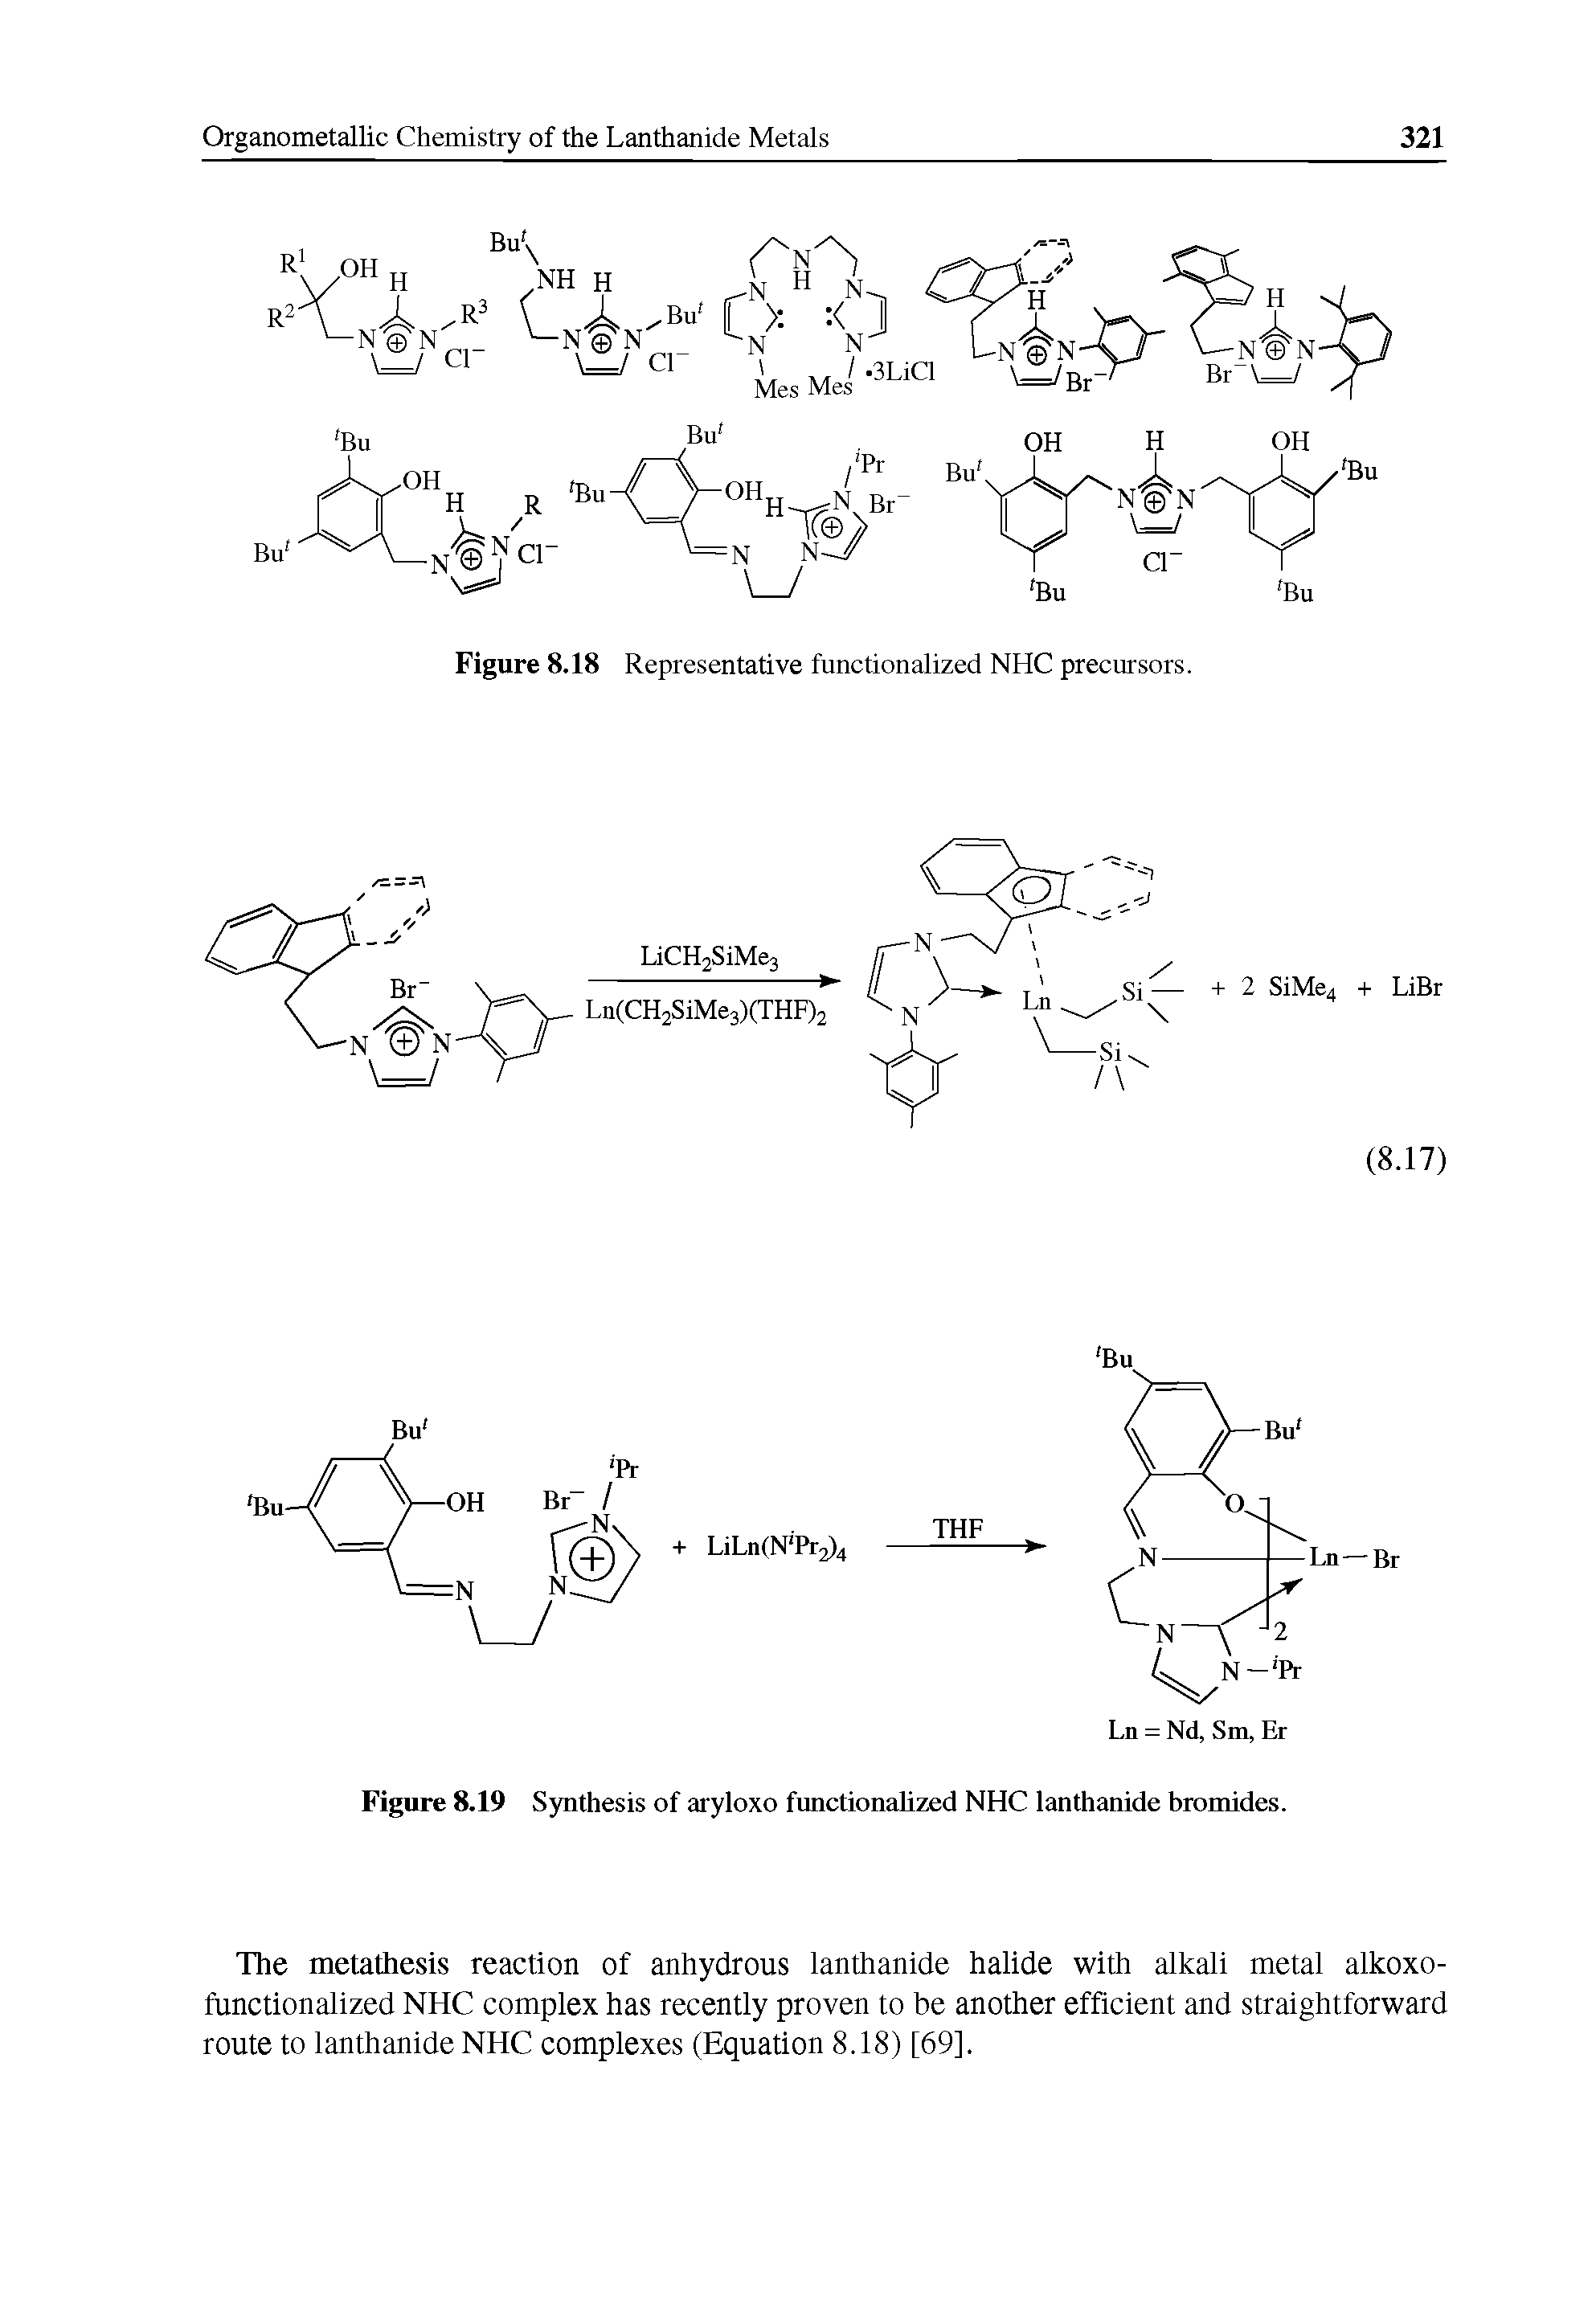 Figure 8.19 Synthesis of aryloxo functionalized NHC lanthanide bromides.